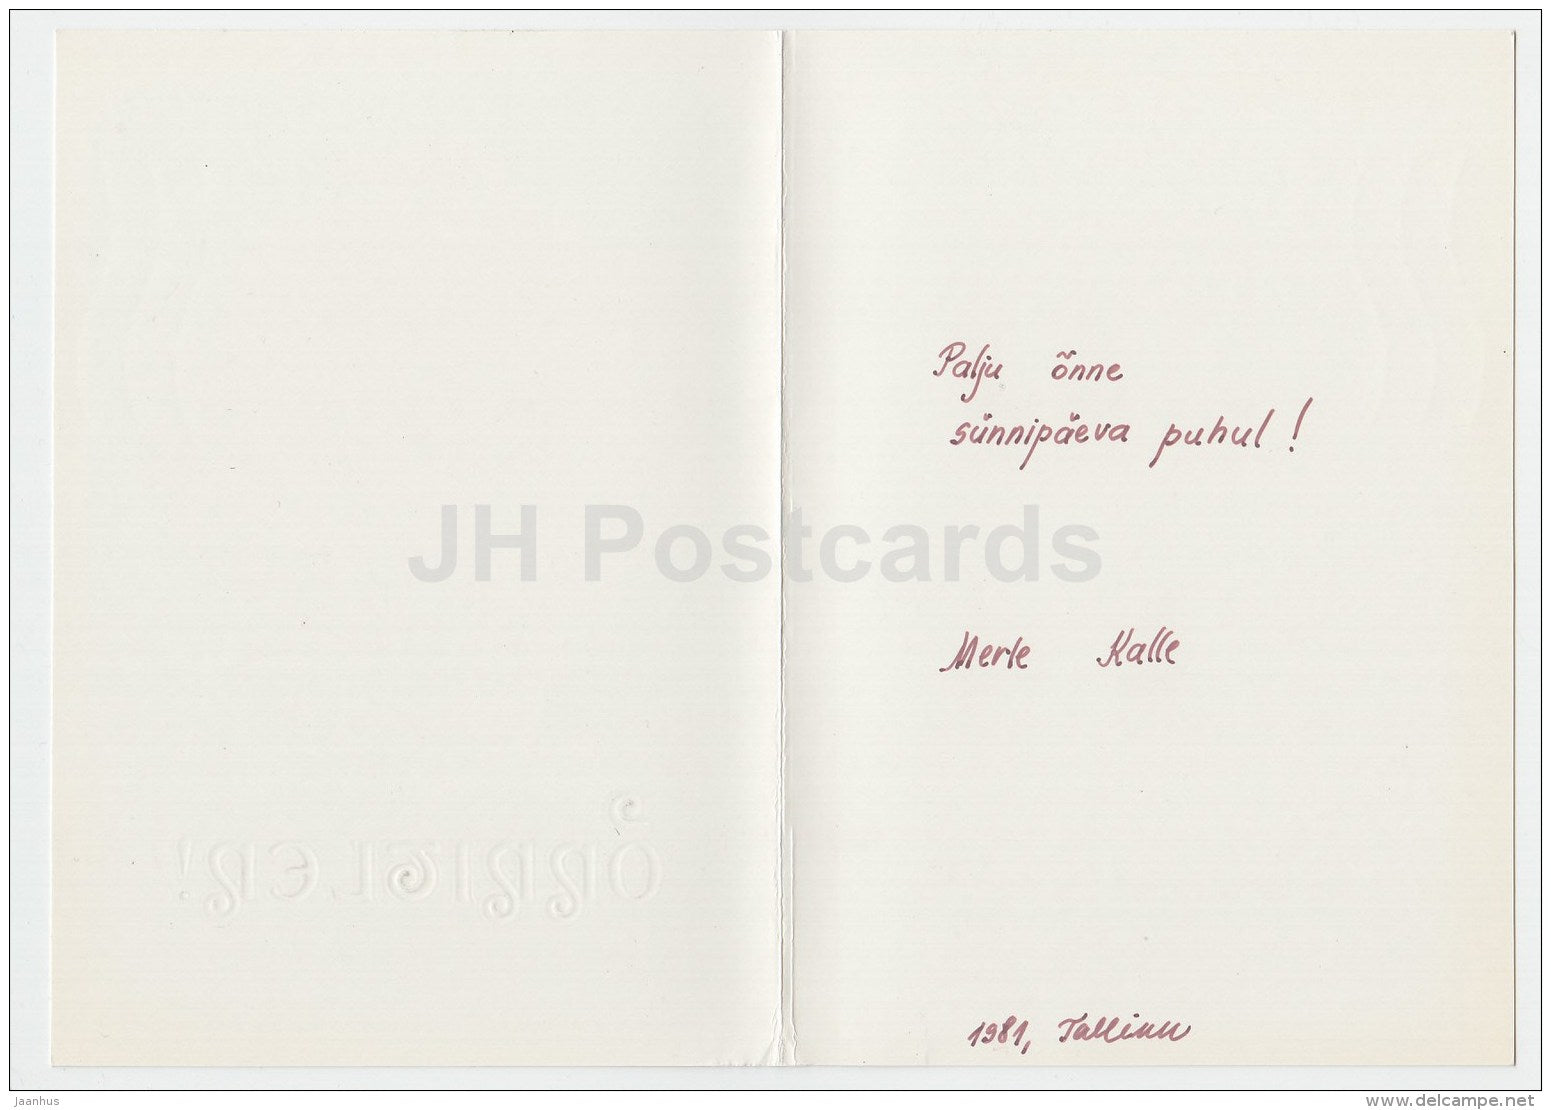 Birthday Greeting Card - pink Rose - flowers - 1981 - Estonia USSR - used - JH Postcards